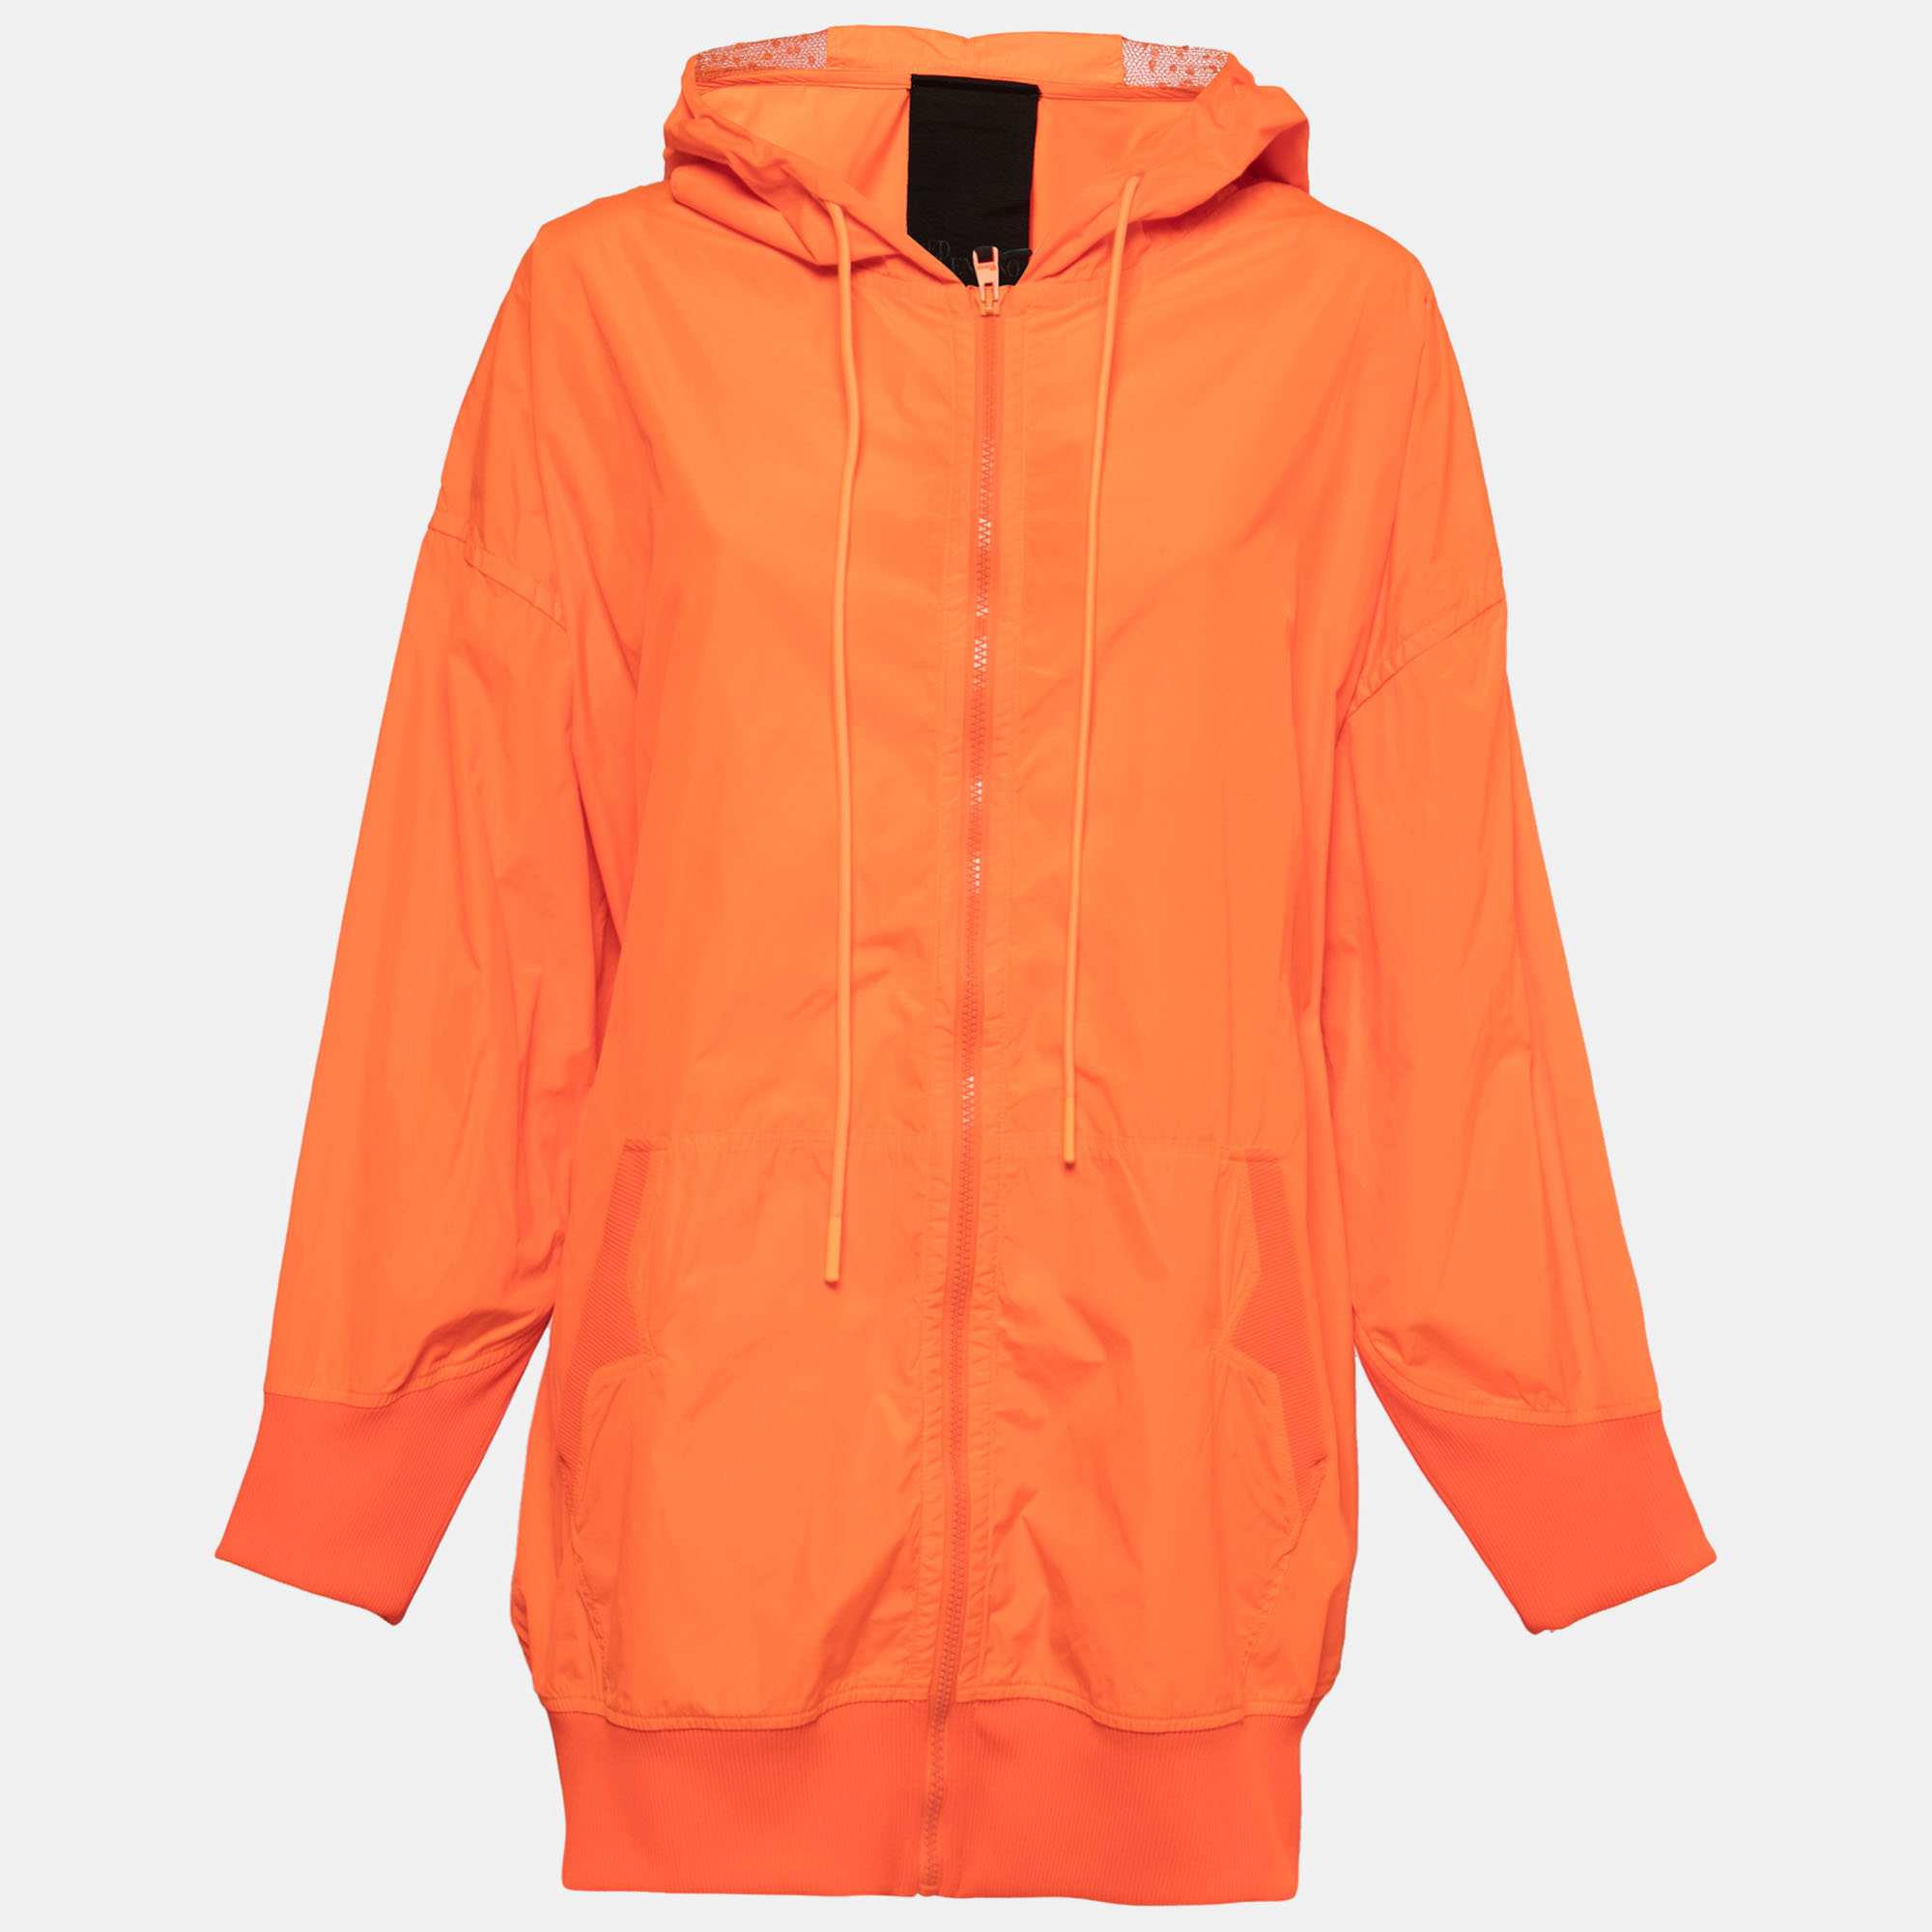 RED Valentino The Black Tag Neon Orange Taffeta Zip Front Hooded Coat S